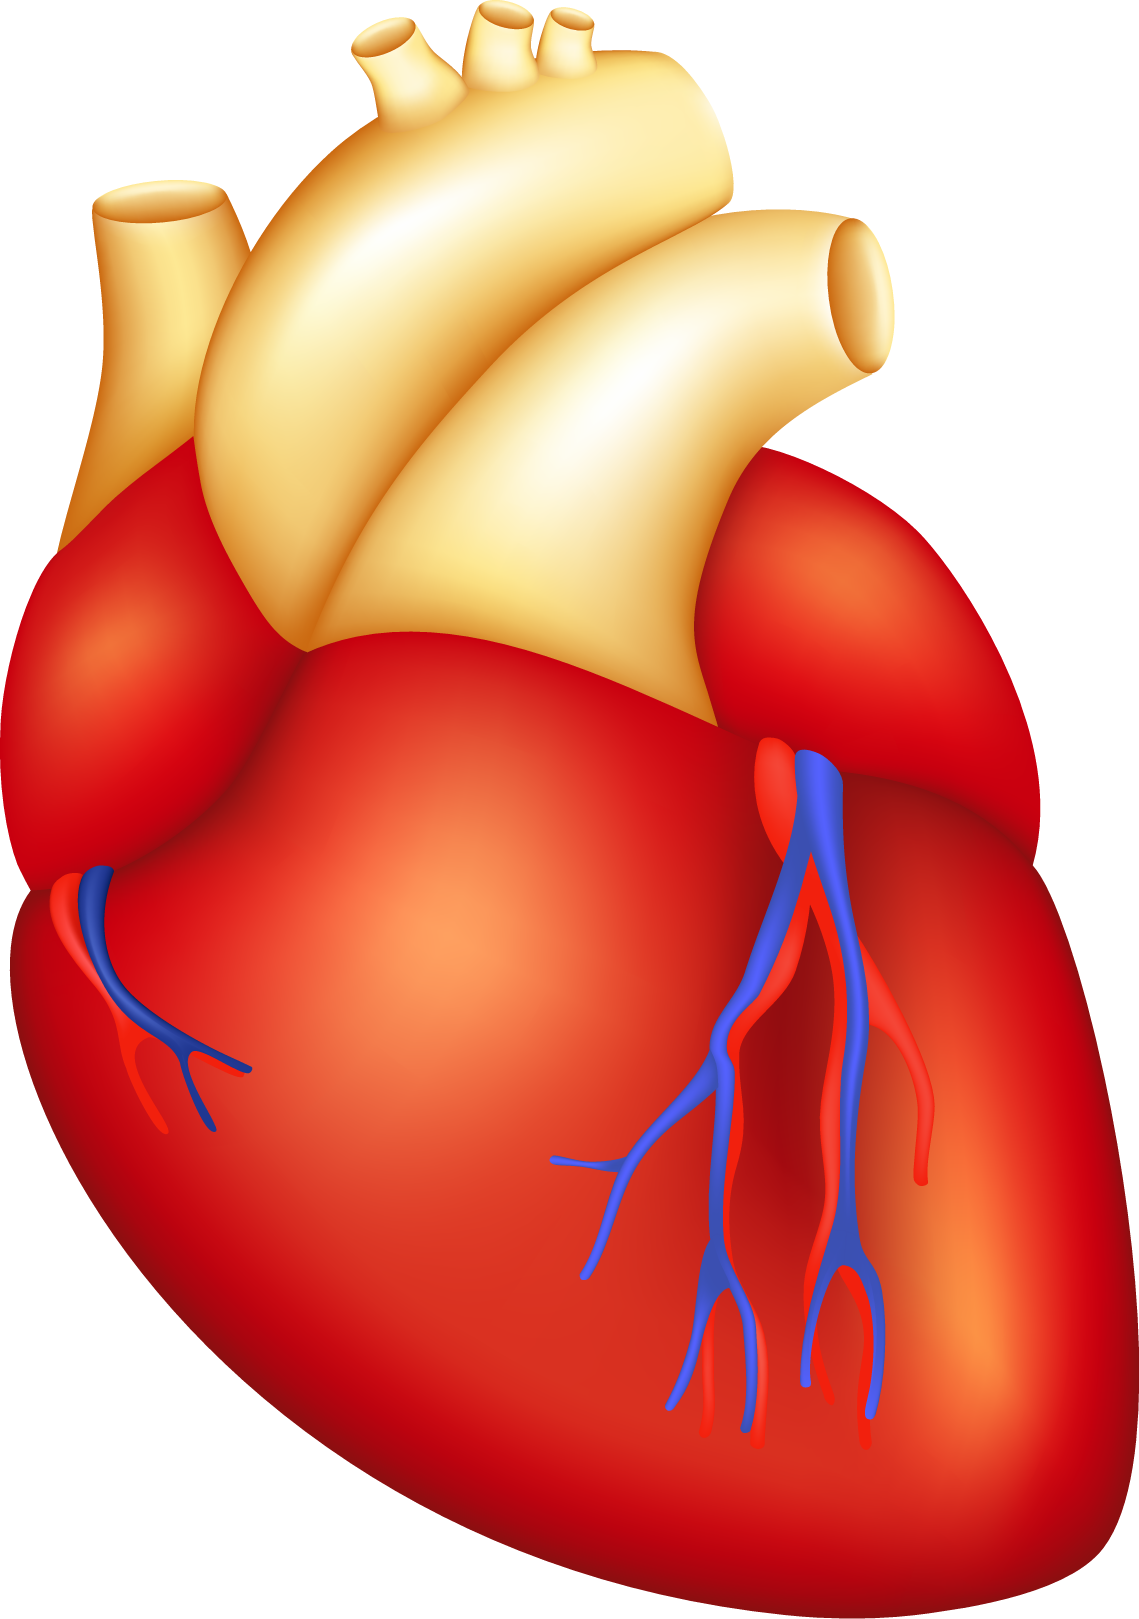 Cardiac Surgery - Cartoon Human Heart (1139x1619)